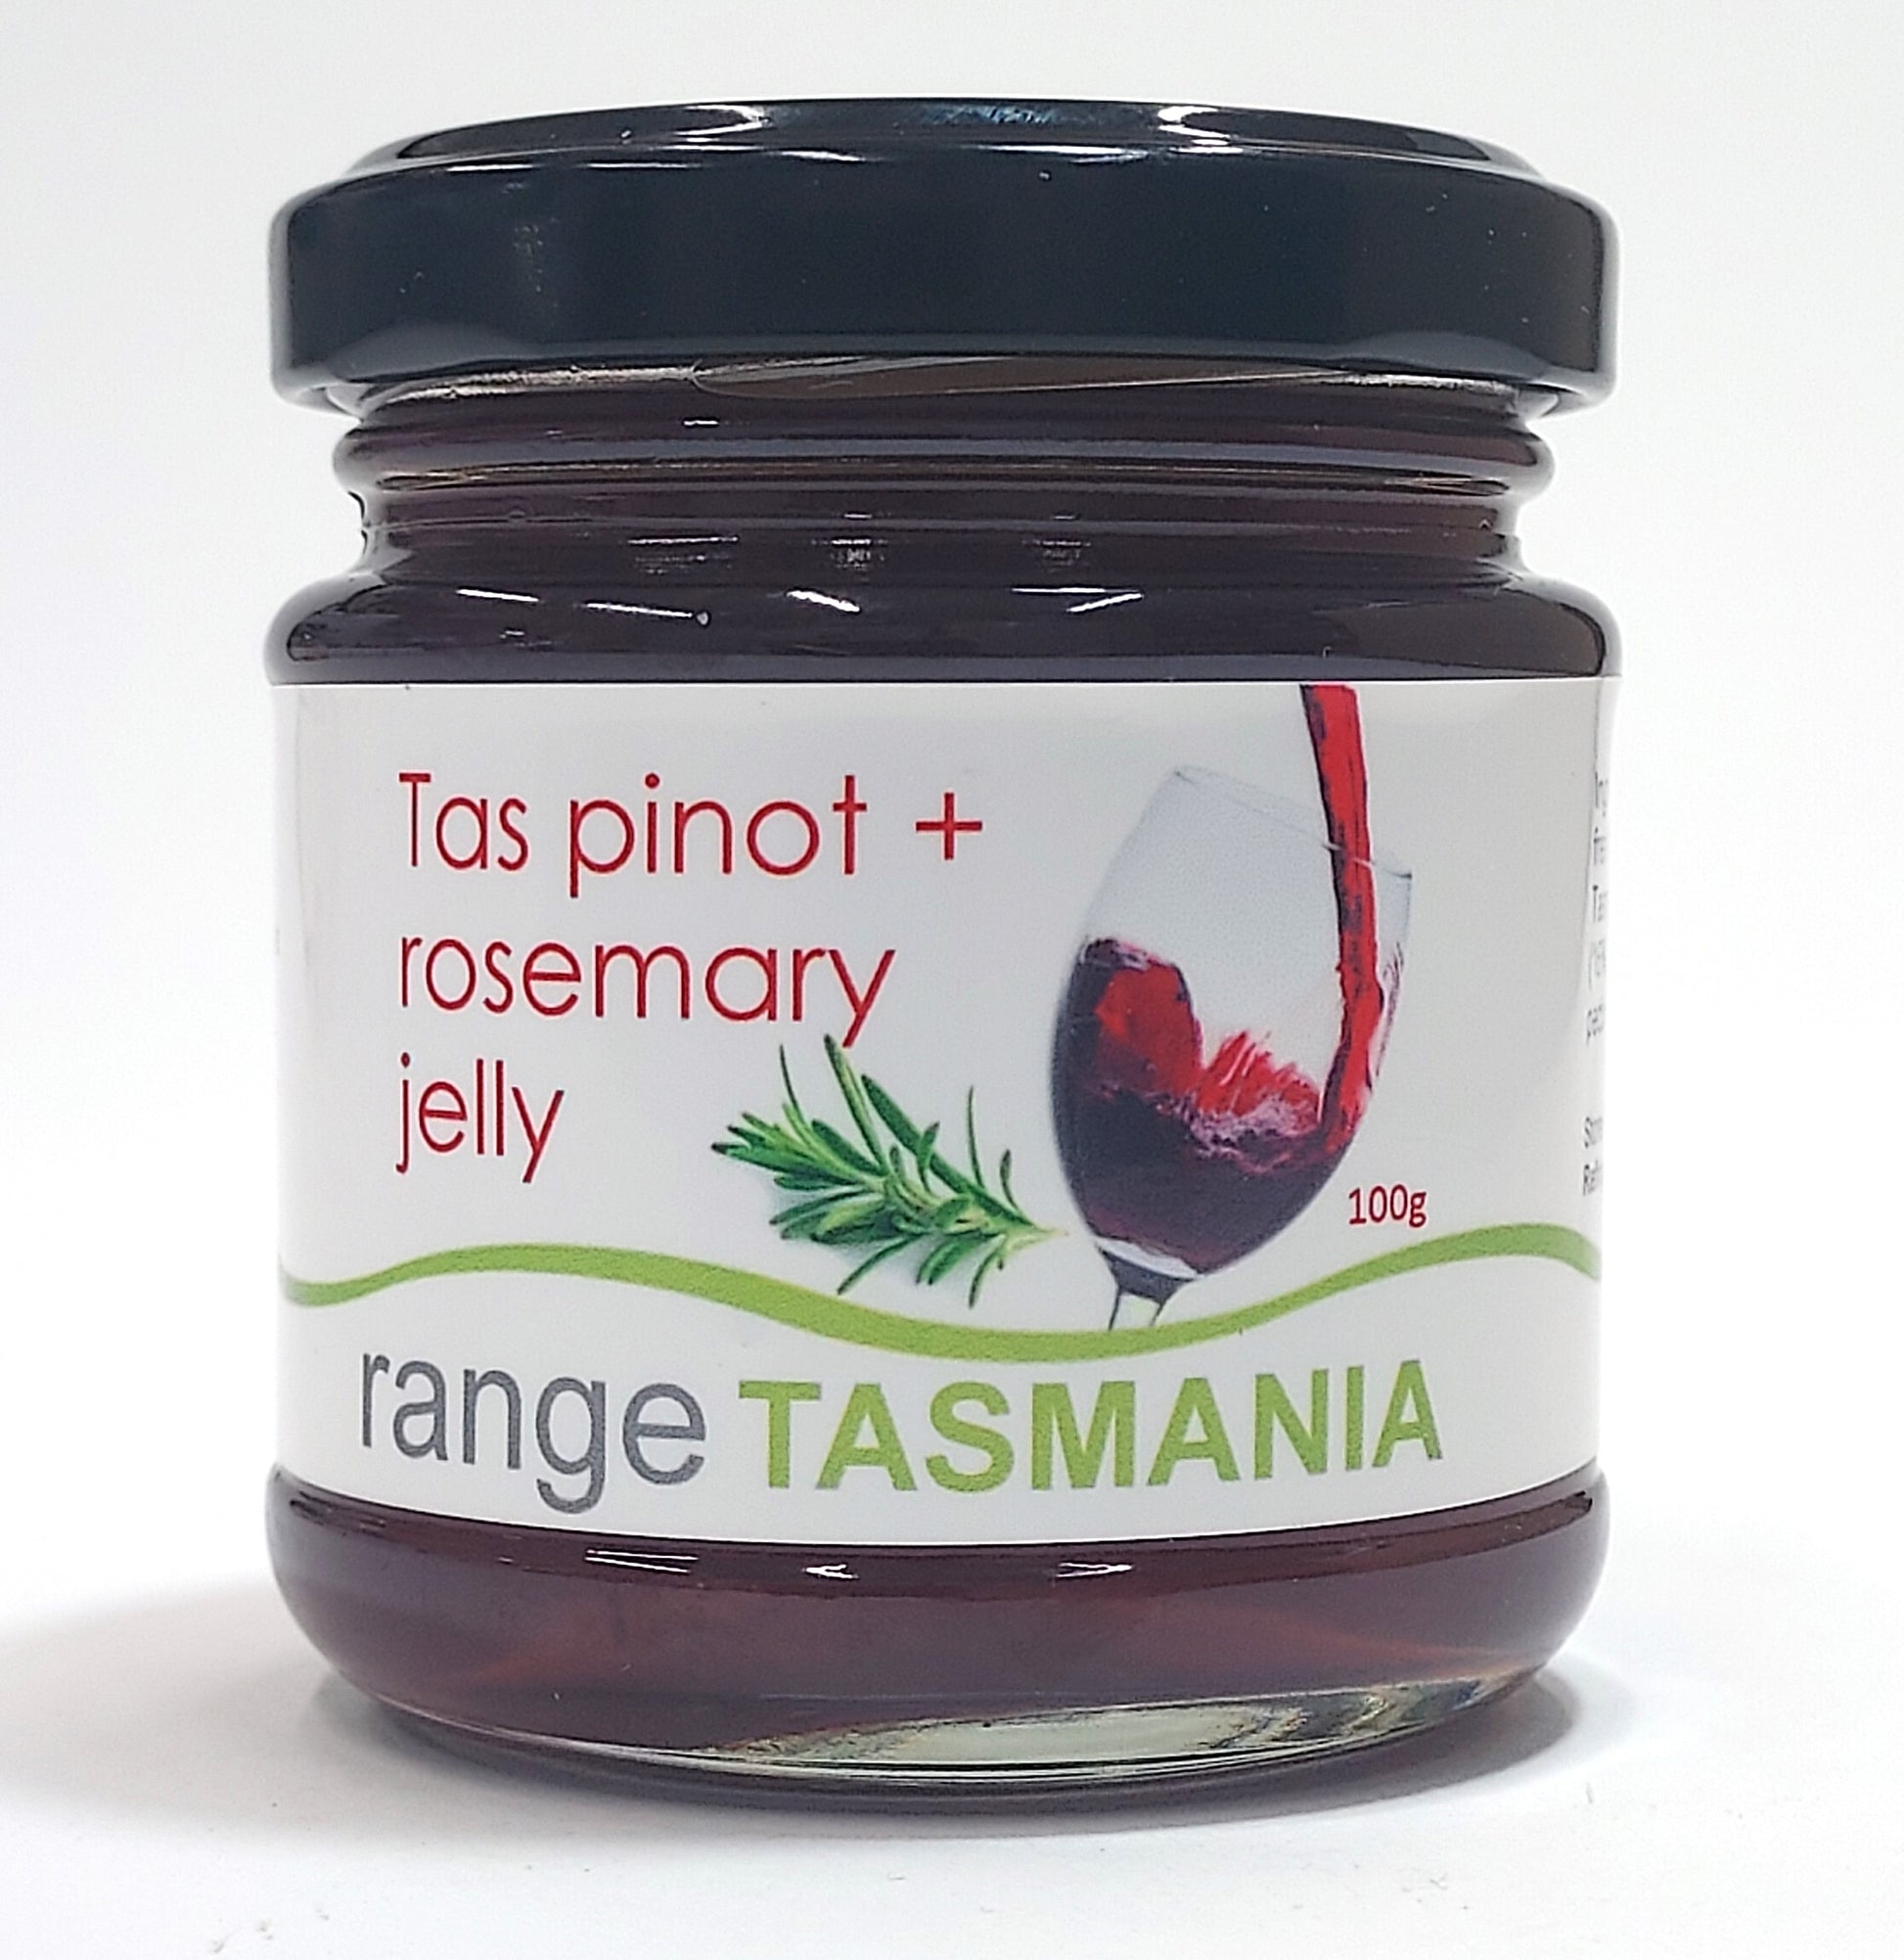 a 100 gram jar of range Tasmania Tas pinot and rosemary jelly